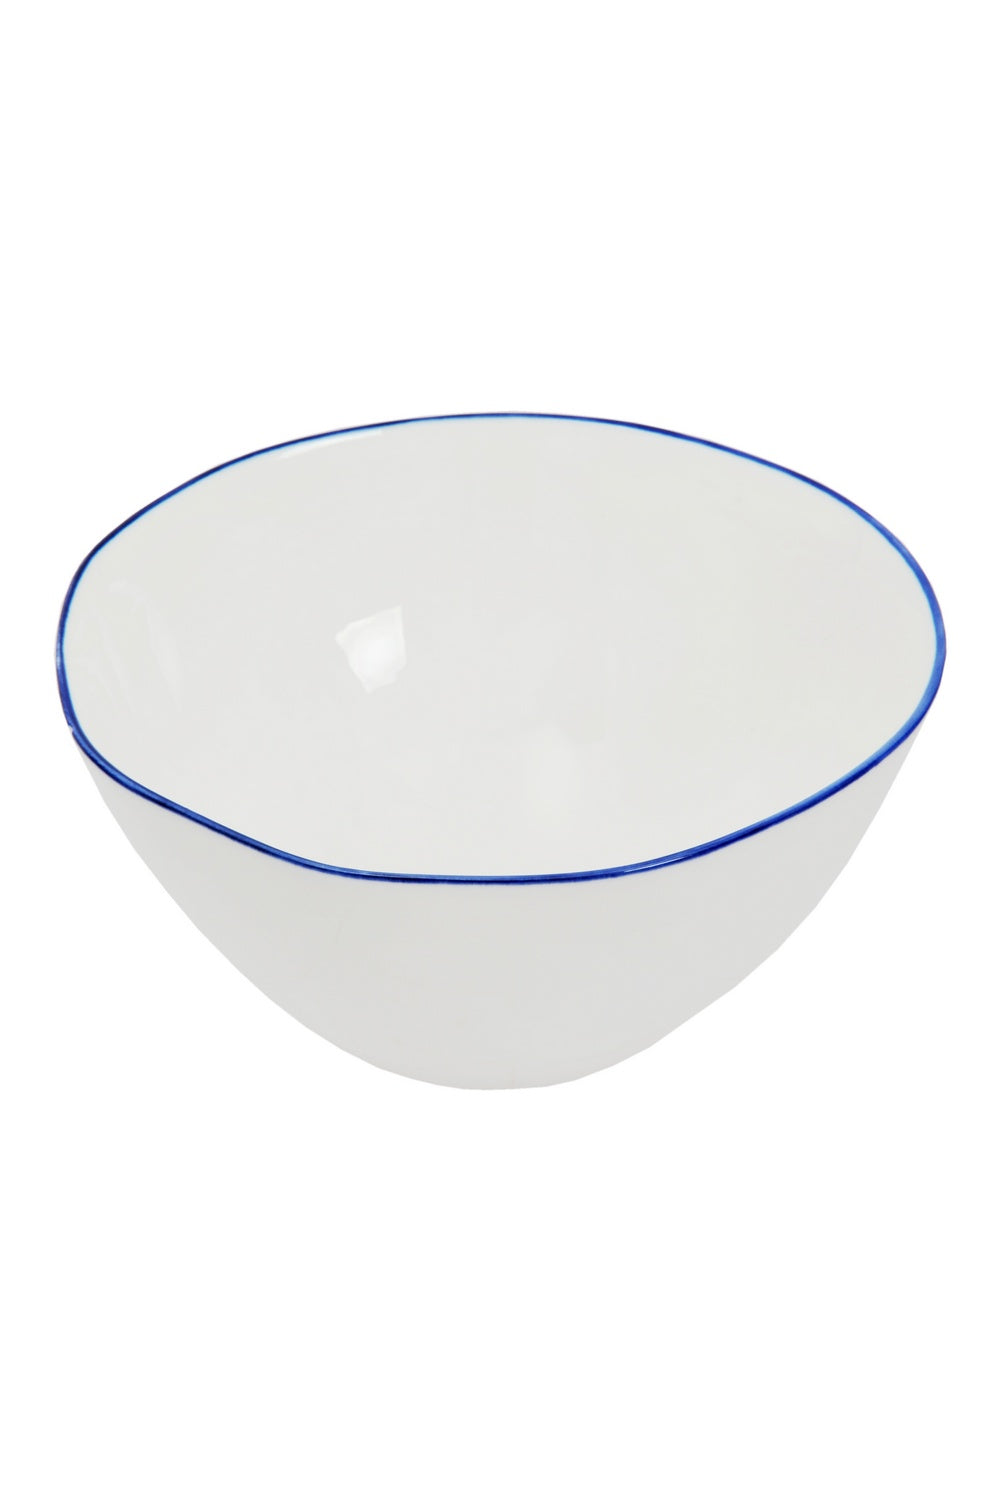 Classic White With Blue Rim Bowl 15.4 cm